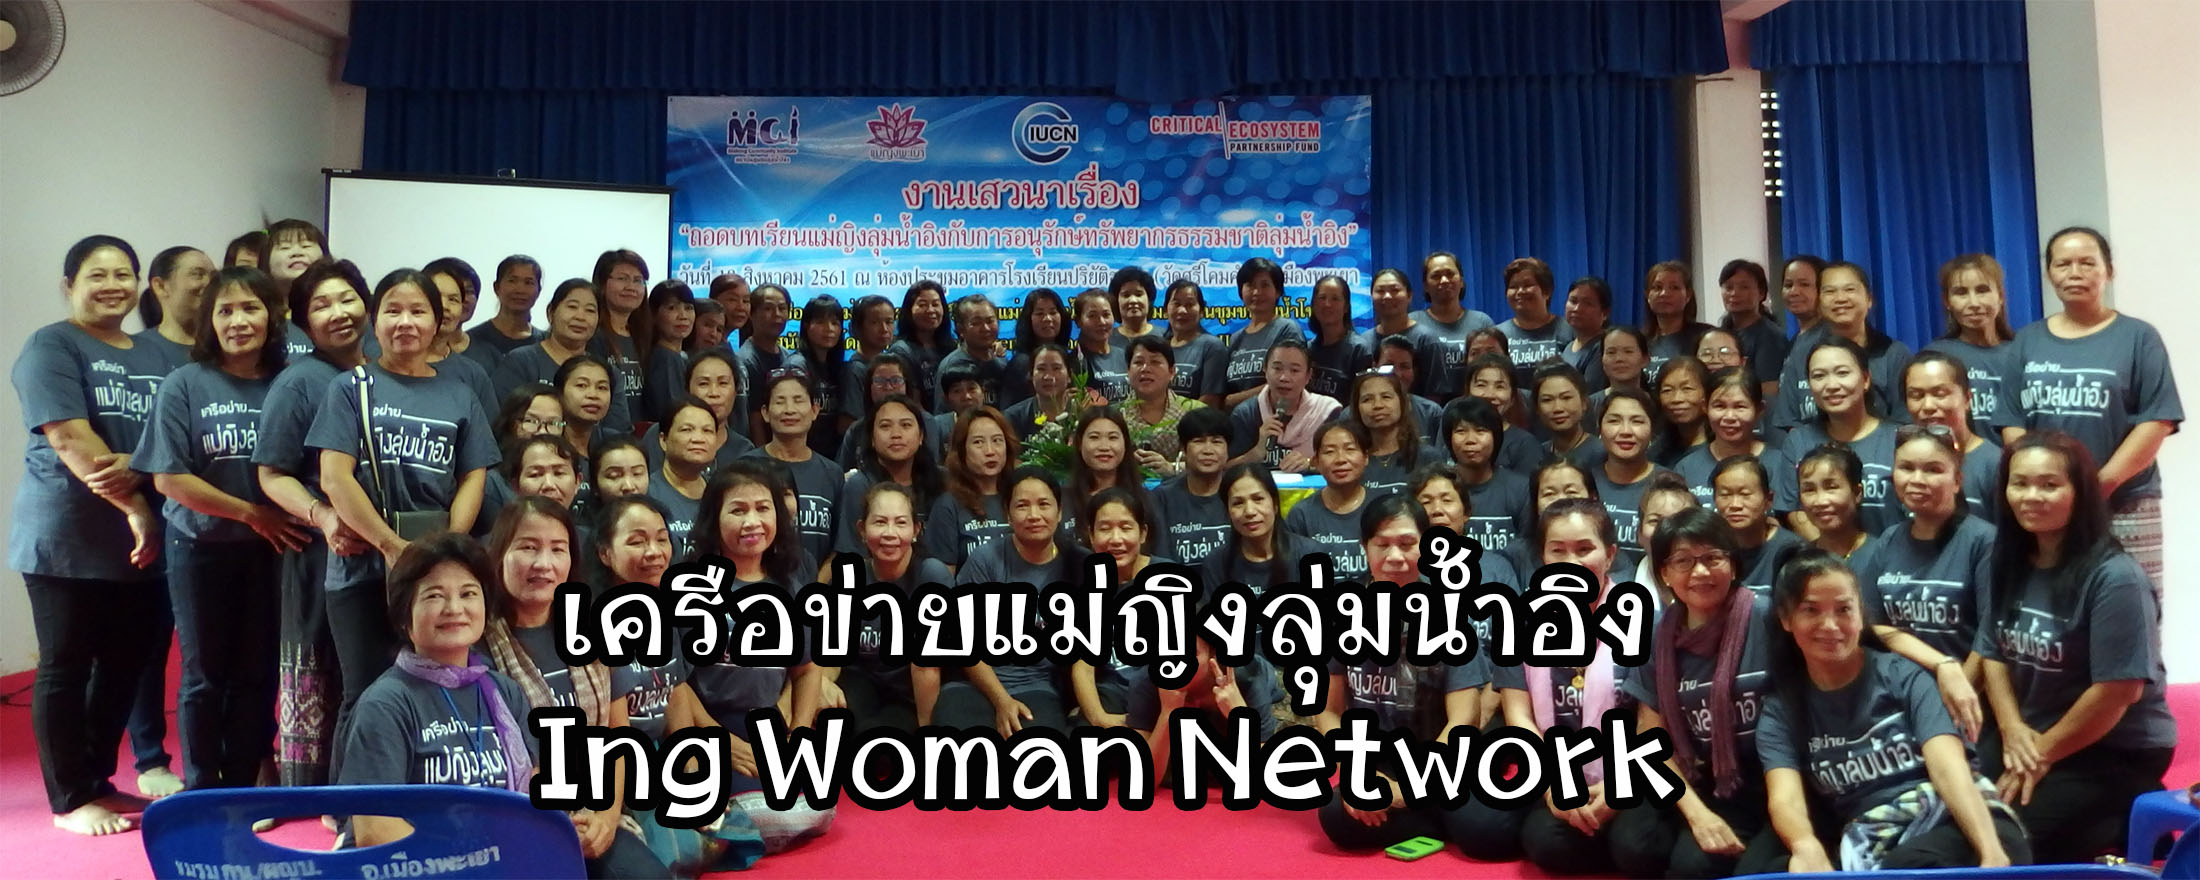 ing woman network 2018